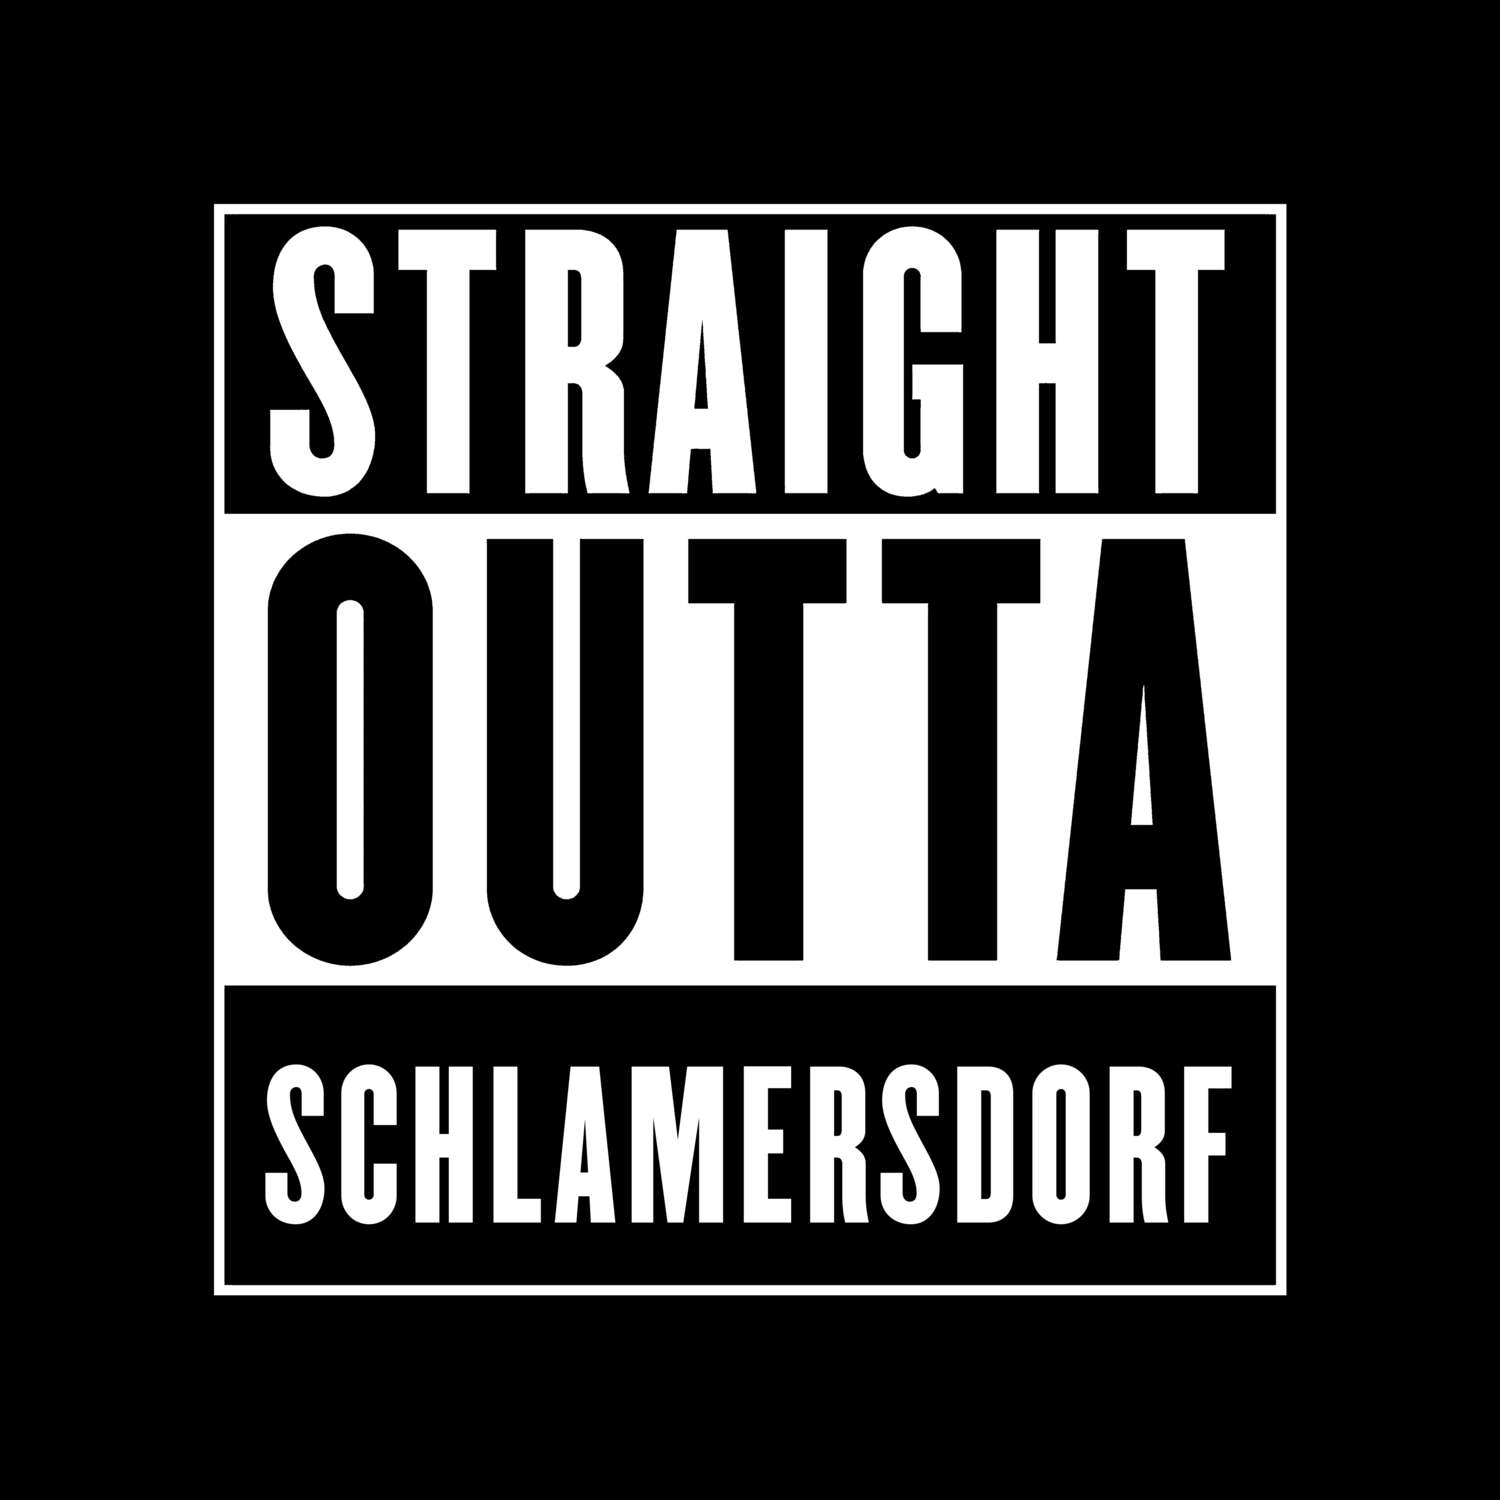 Schlamersdorf T-Shirt »Straight Outta«